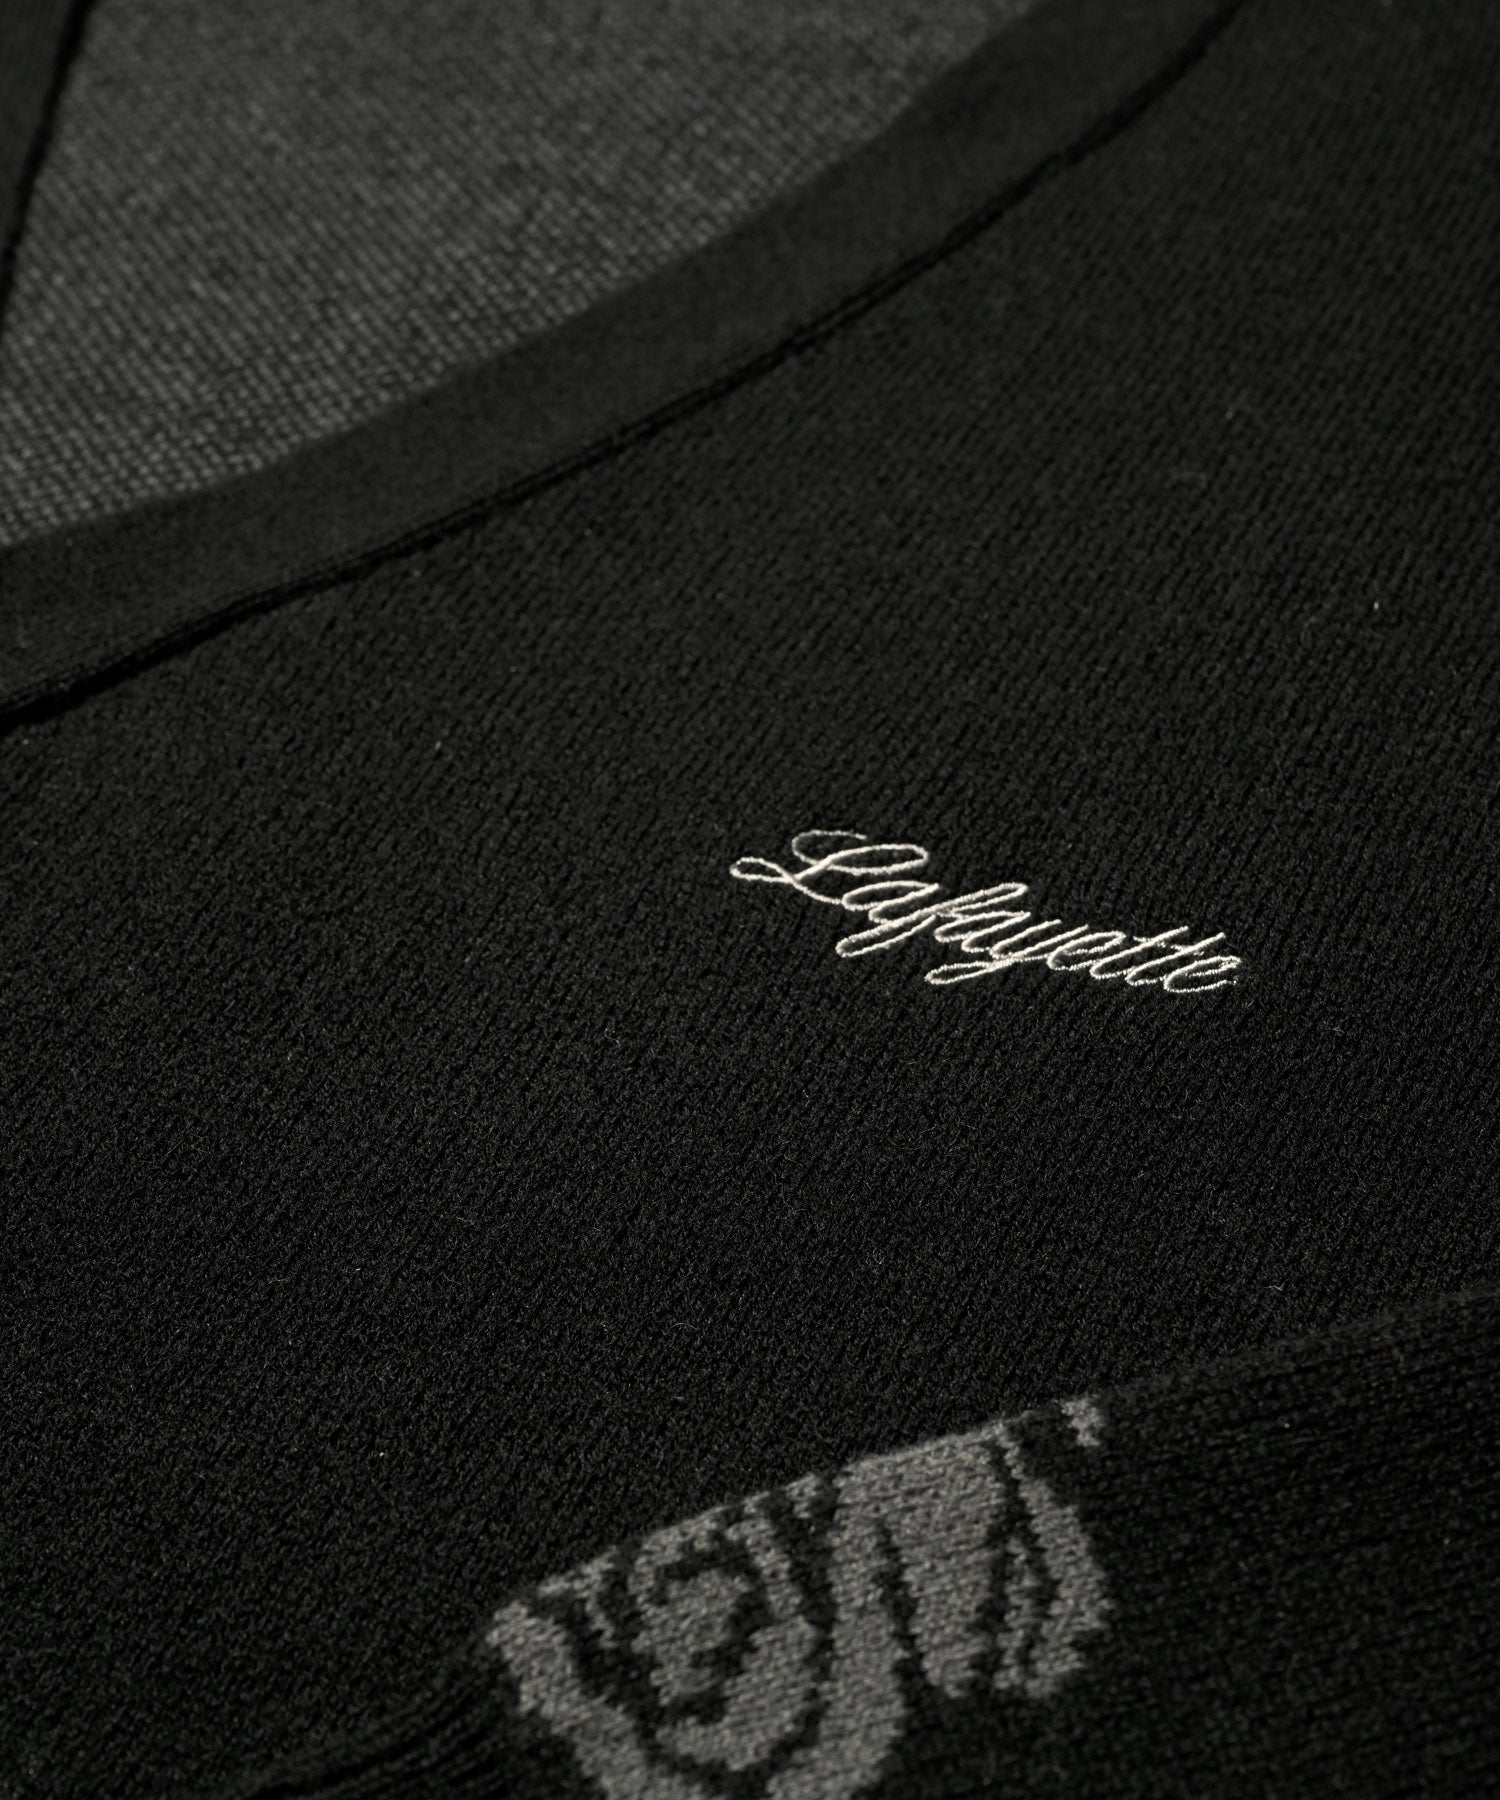 LFYT - 玫瑰色針織開襟衫 LA230601